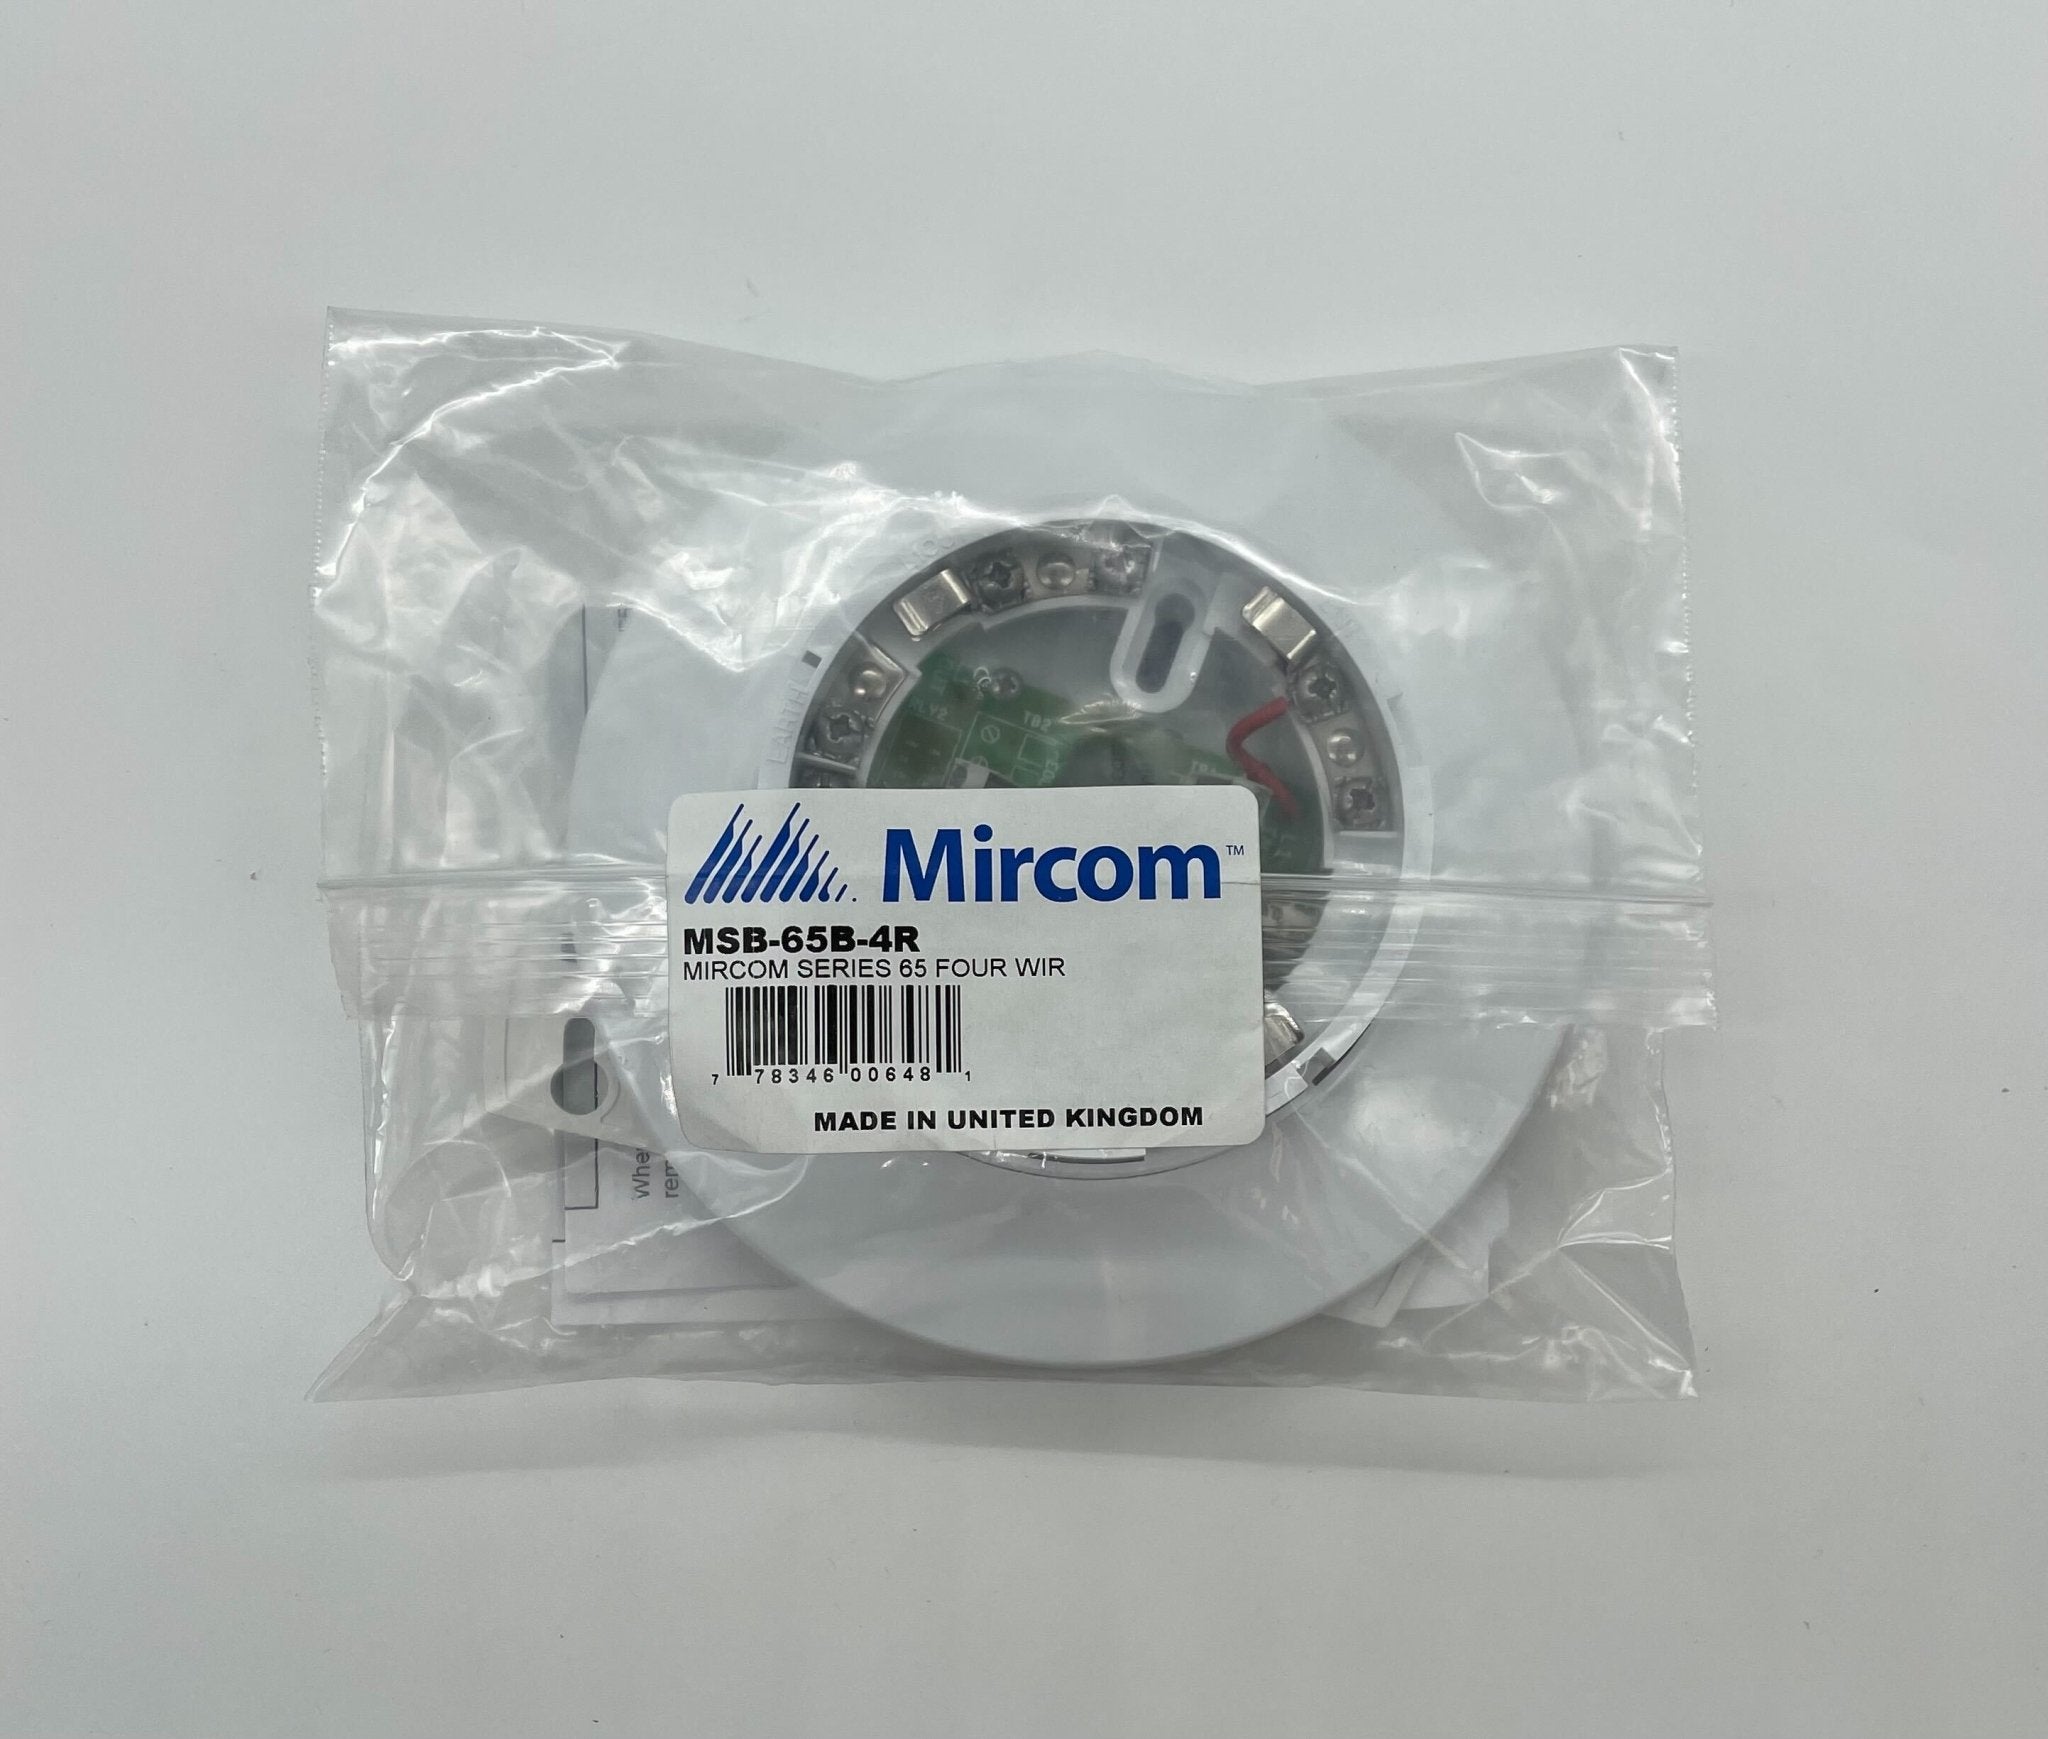 Mircom MSB-65B-4R - The Fire Alarm Supplier